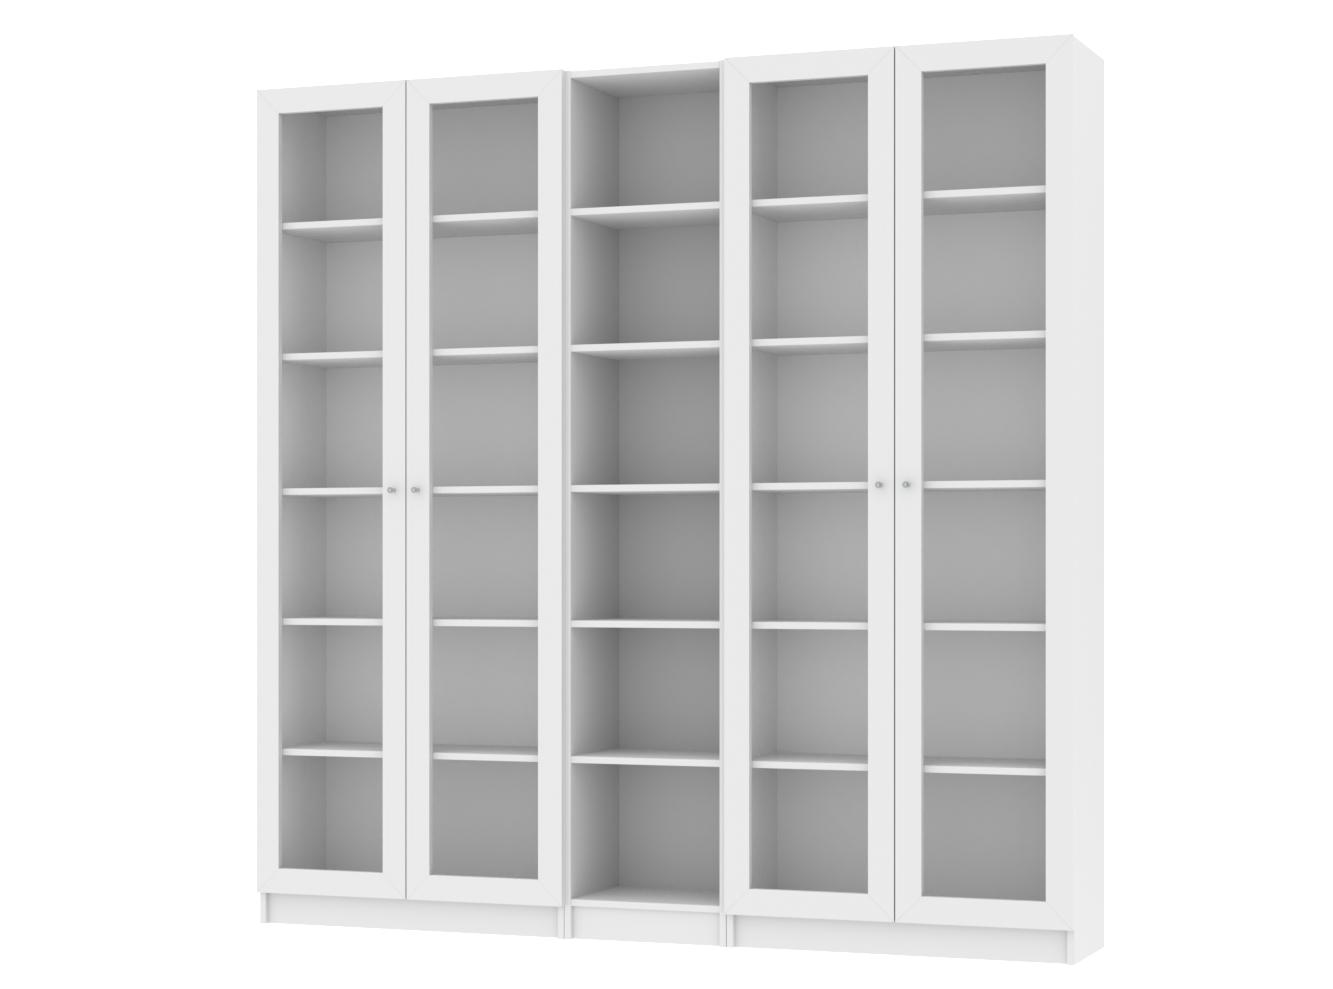  Книжный шкаф Билли 396 white ИКЕА (IKEA) изображение товара